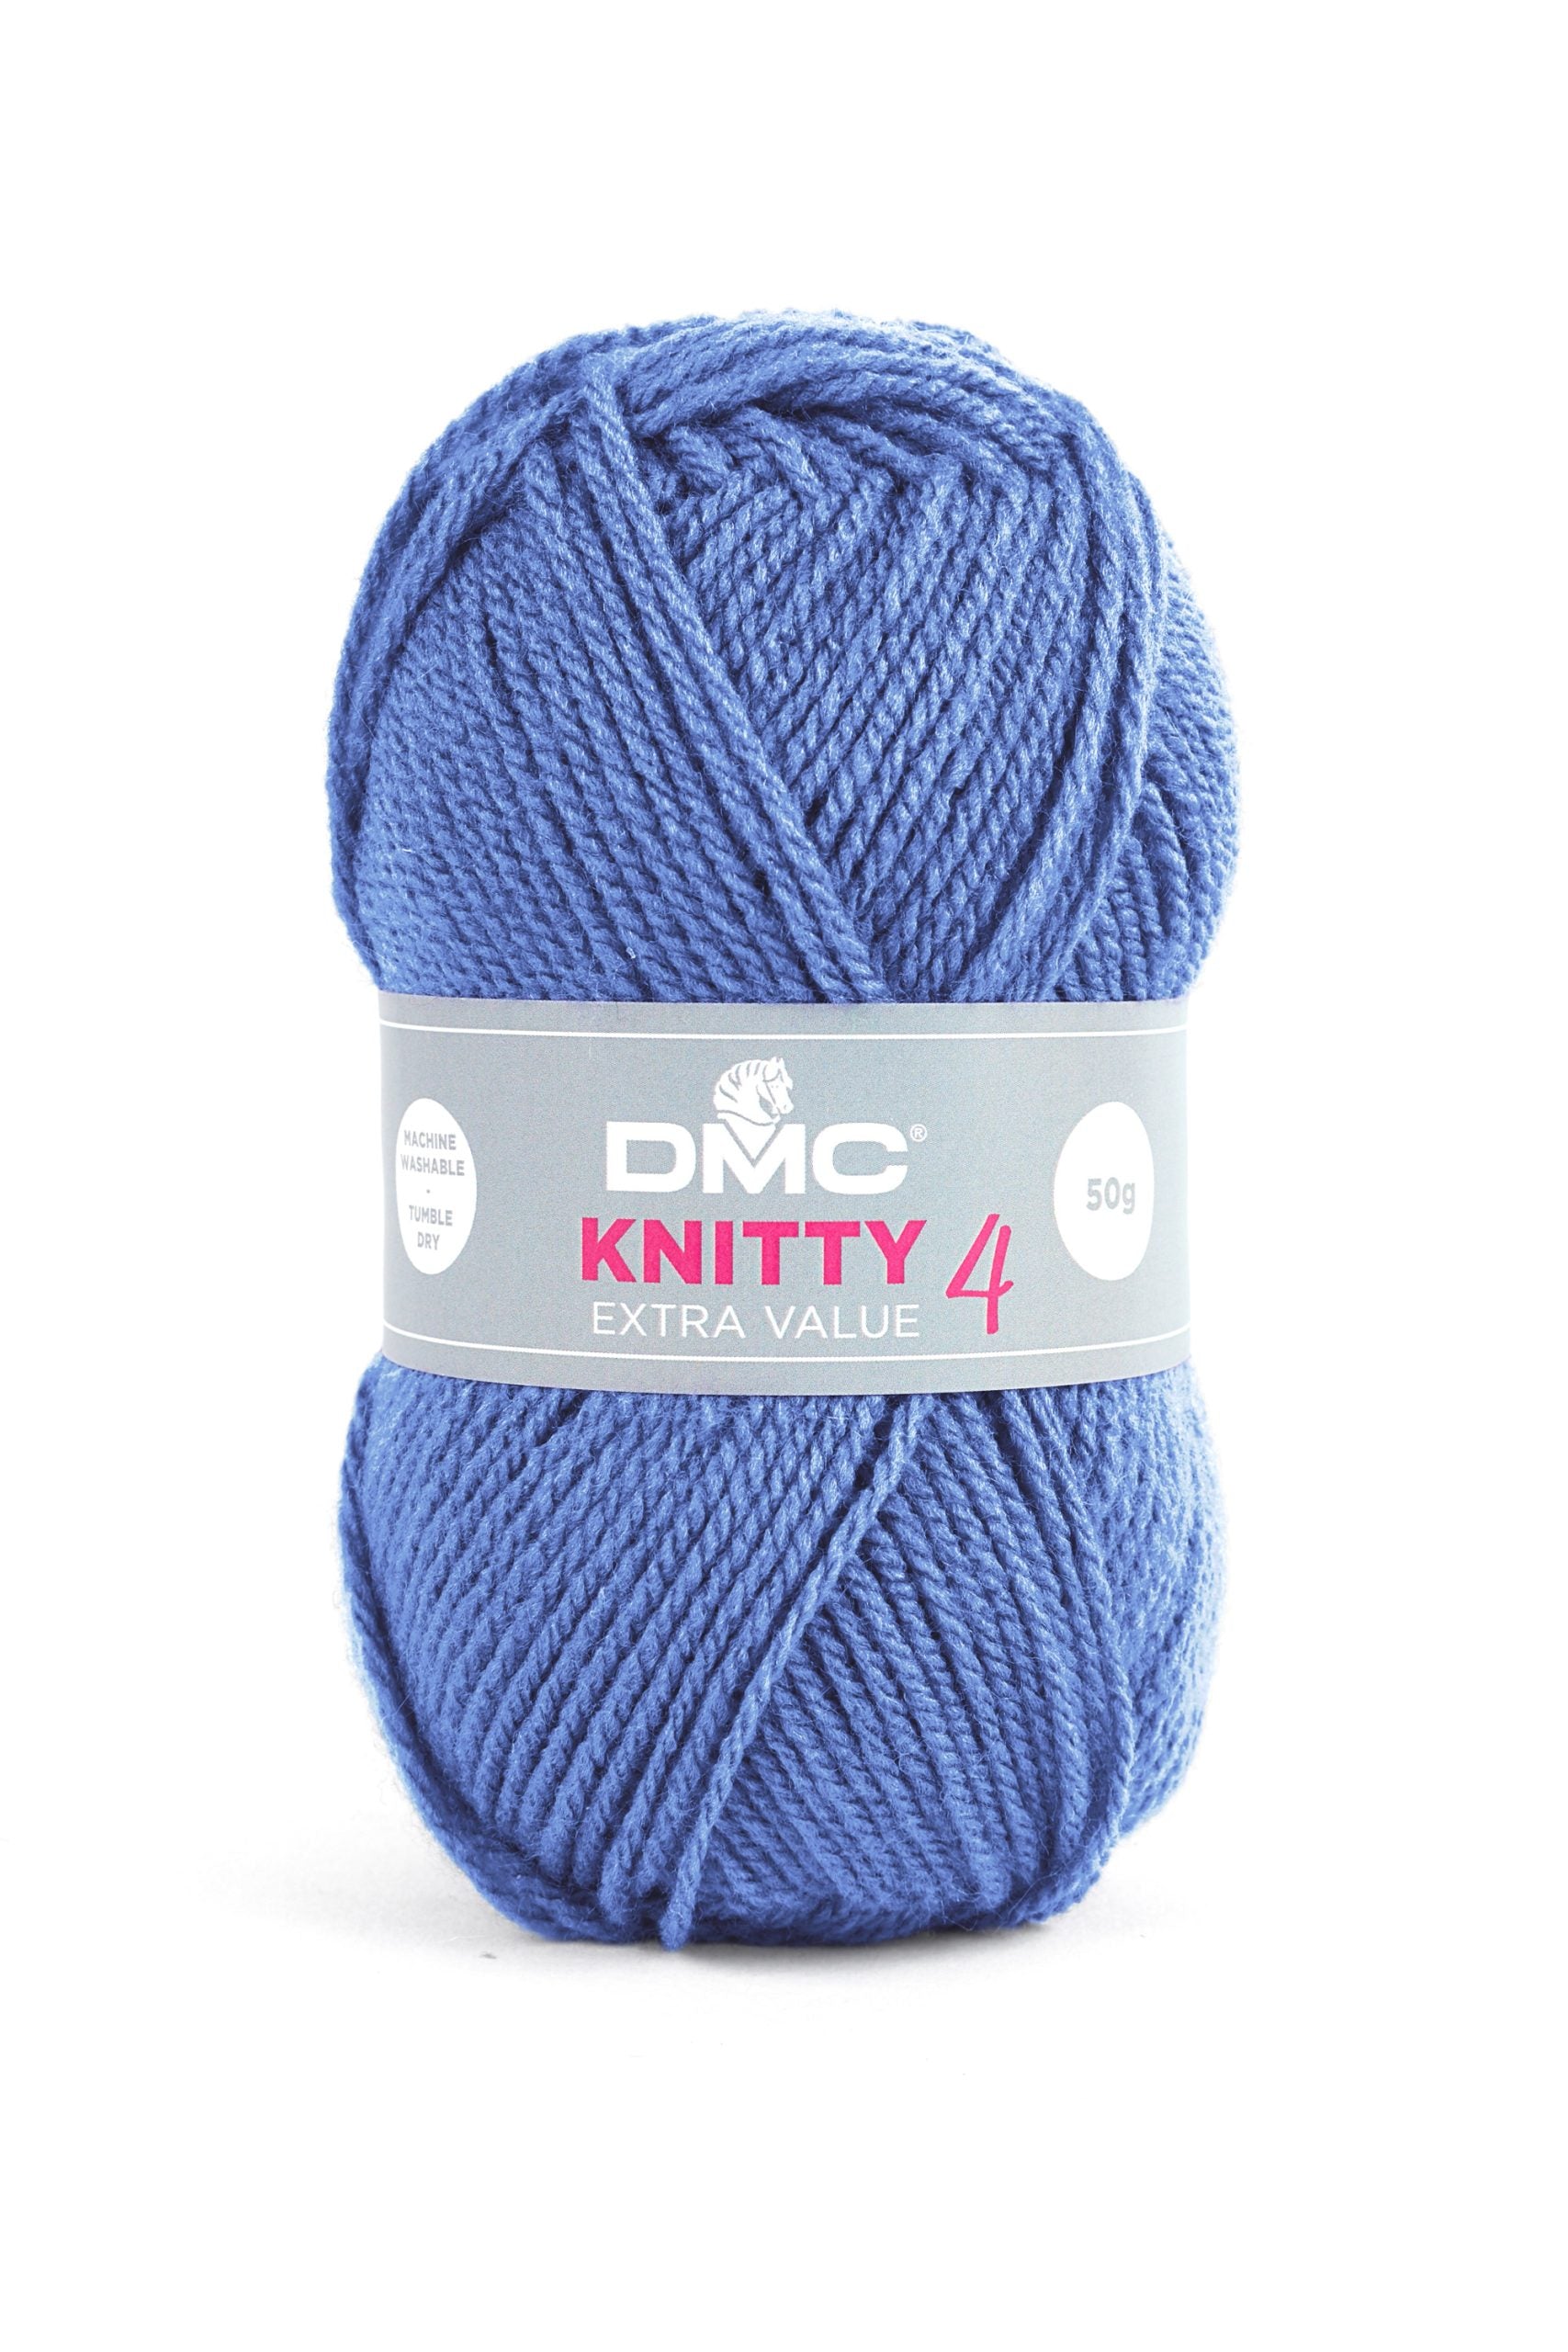 Lana Dmc Knitty 4 Colore 969